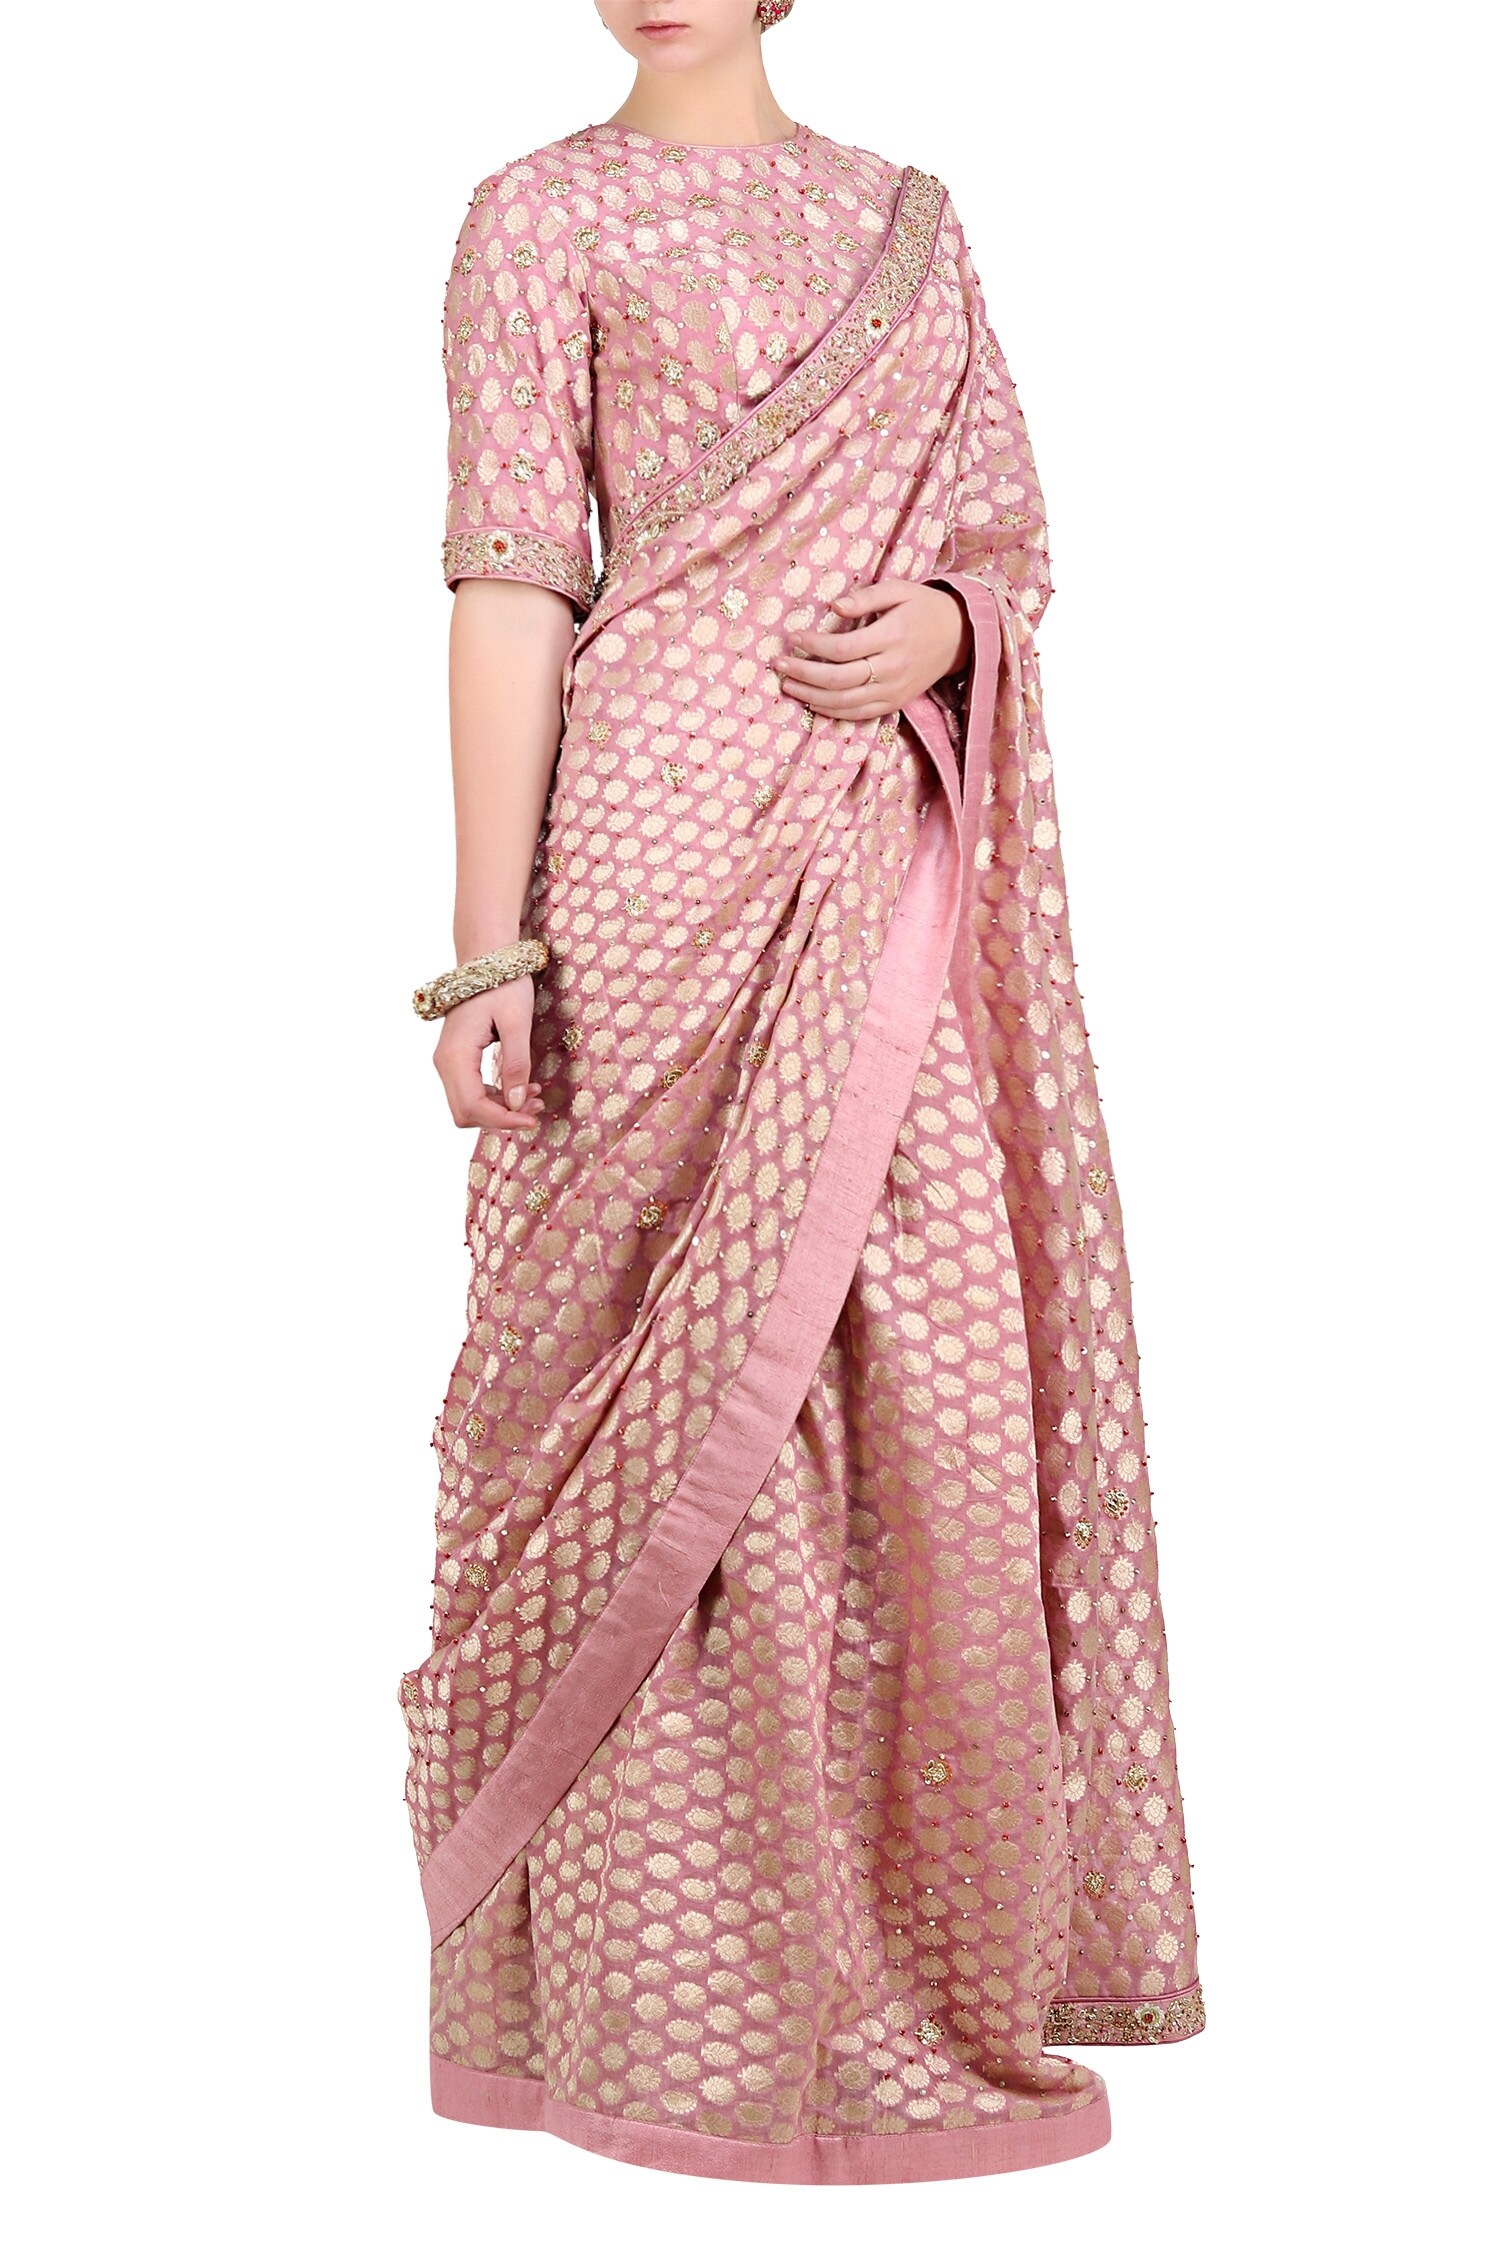 Nikasha Pink Round Chanderi Brocade Saree With Blouse For Women